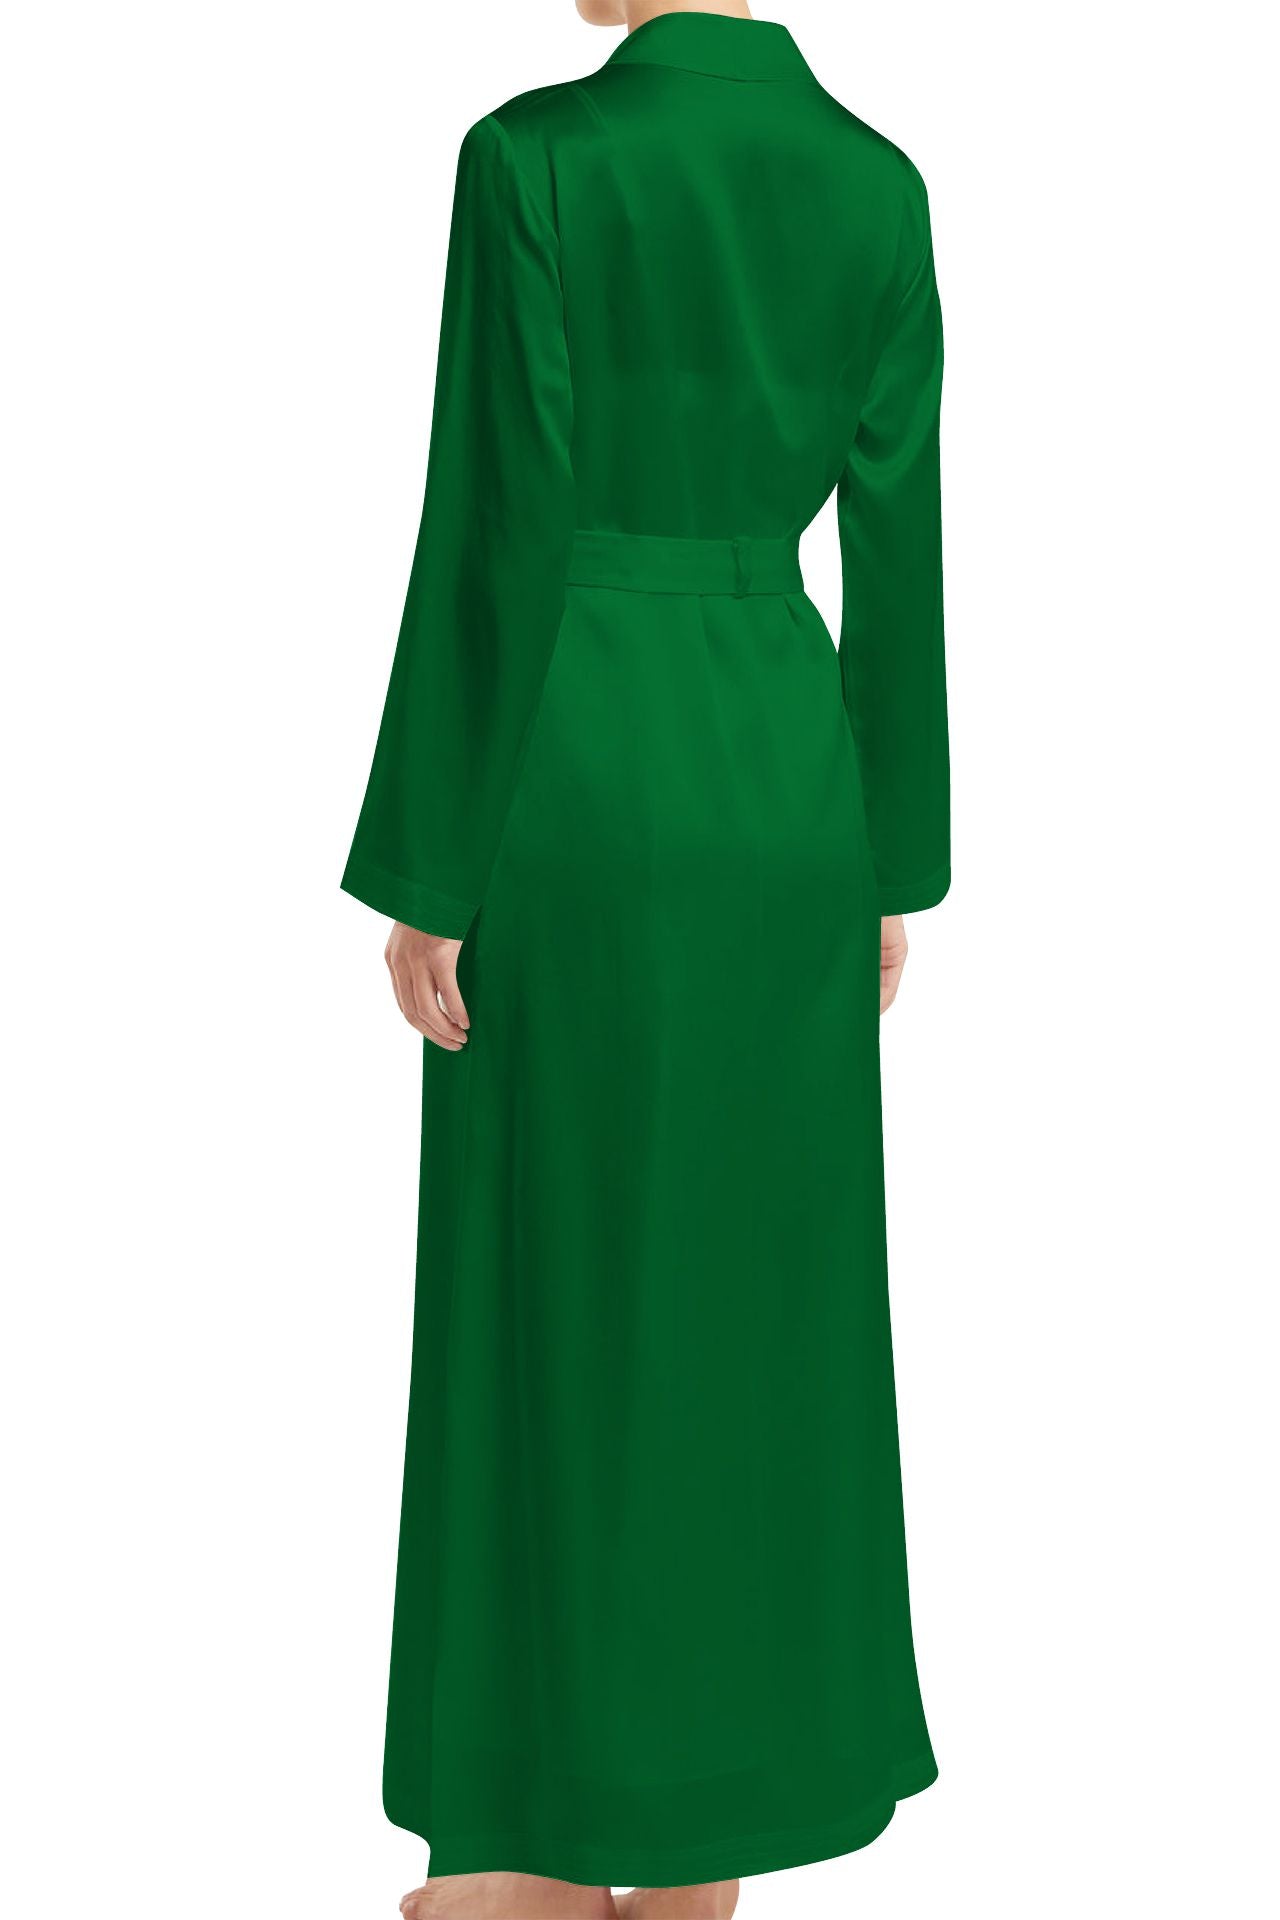 "green silk wrap dress" "women's long sleeve wrap dress" "wrap maxi dress green" "Kyle X Shahida"